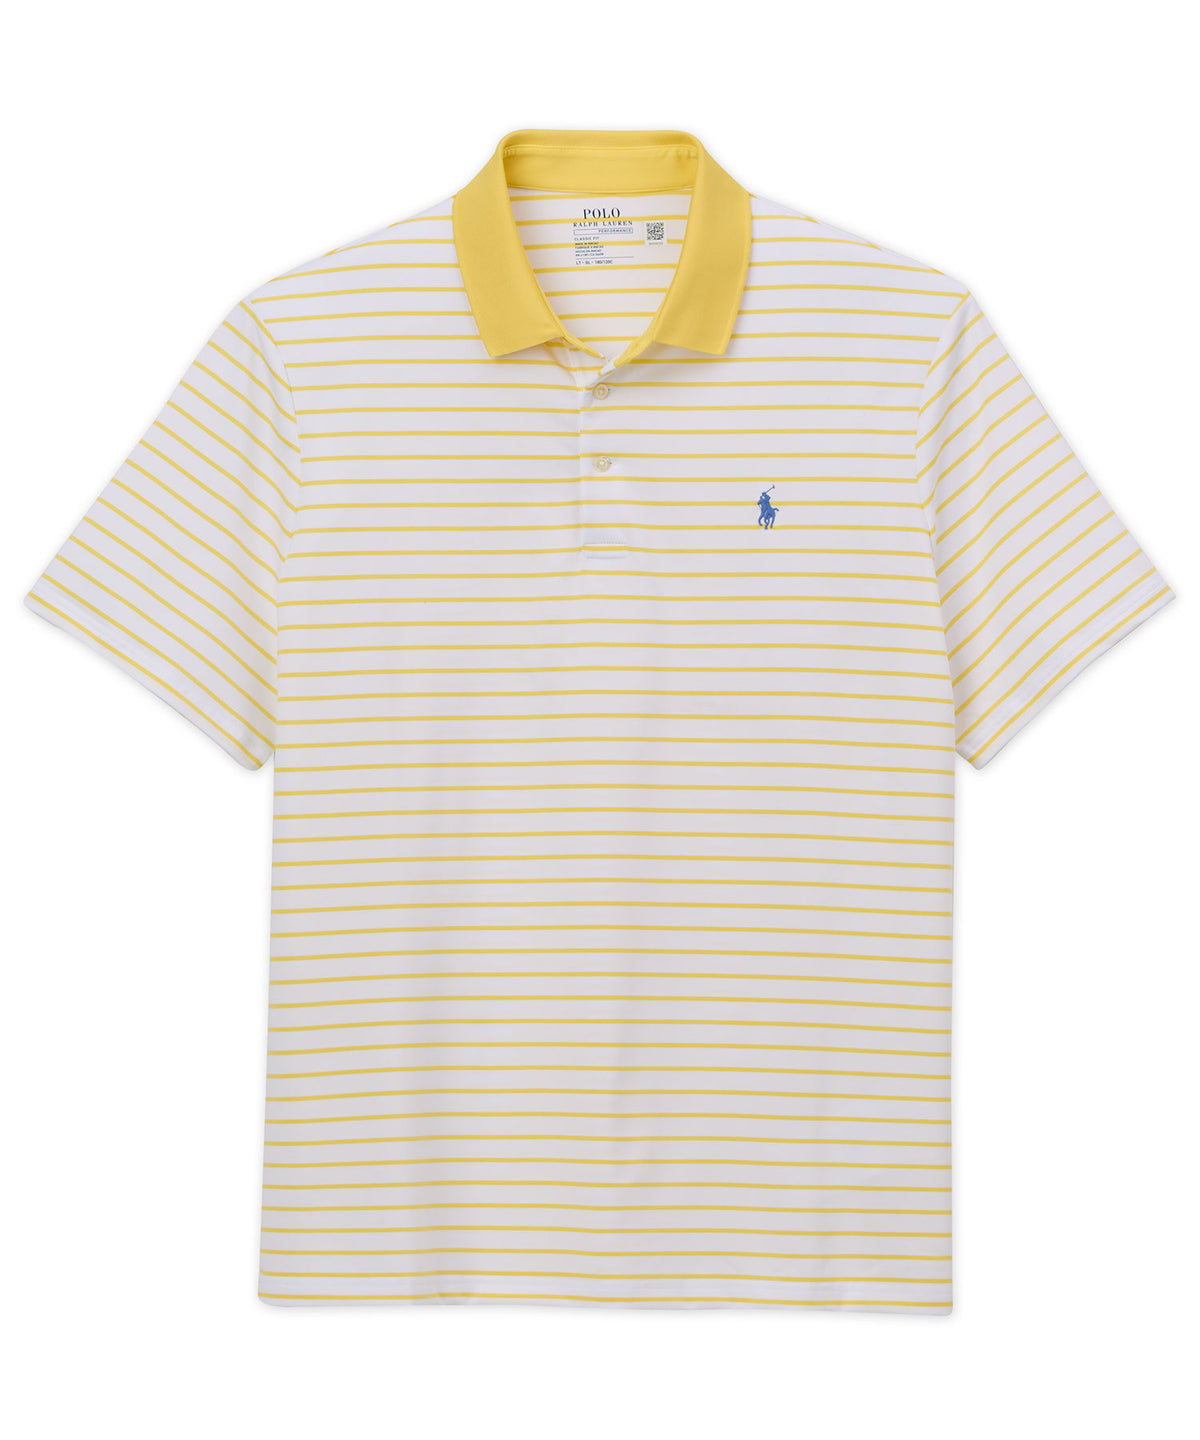 Polo Ralph Lauren Short Sleeve Stripe Performance Polo Knit Shirt, Men's Big & Tall